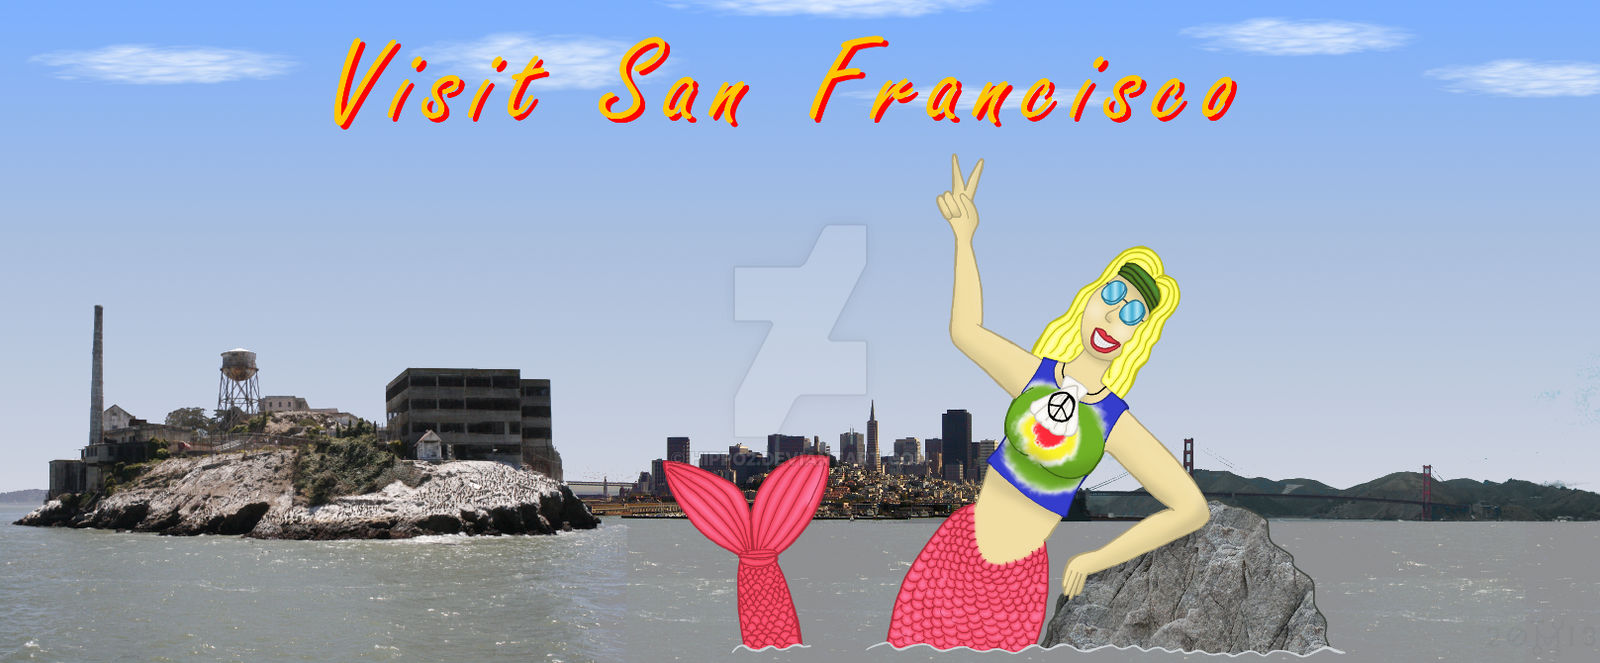 Visit San Francisco